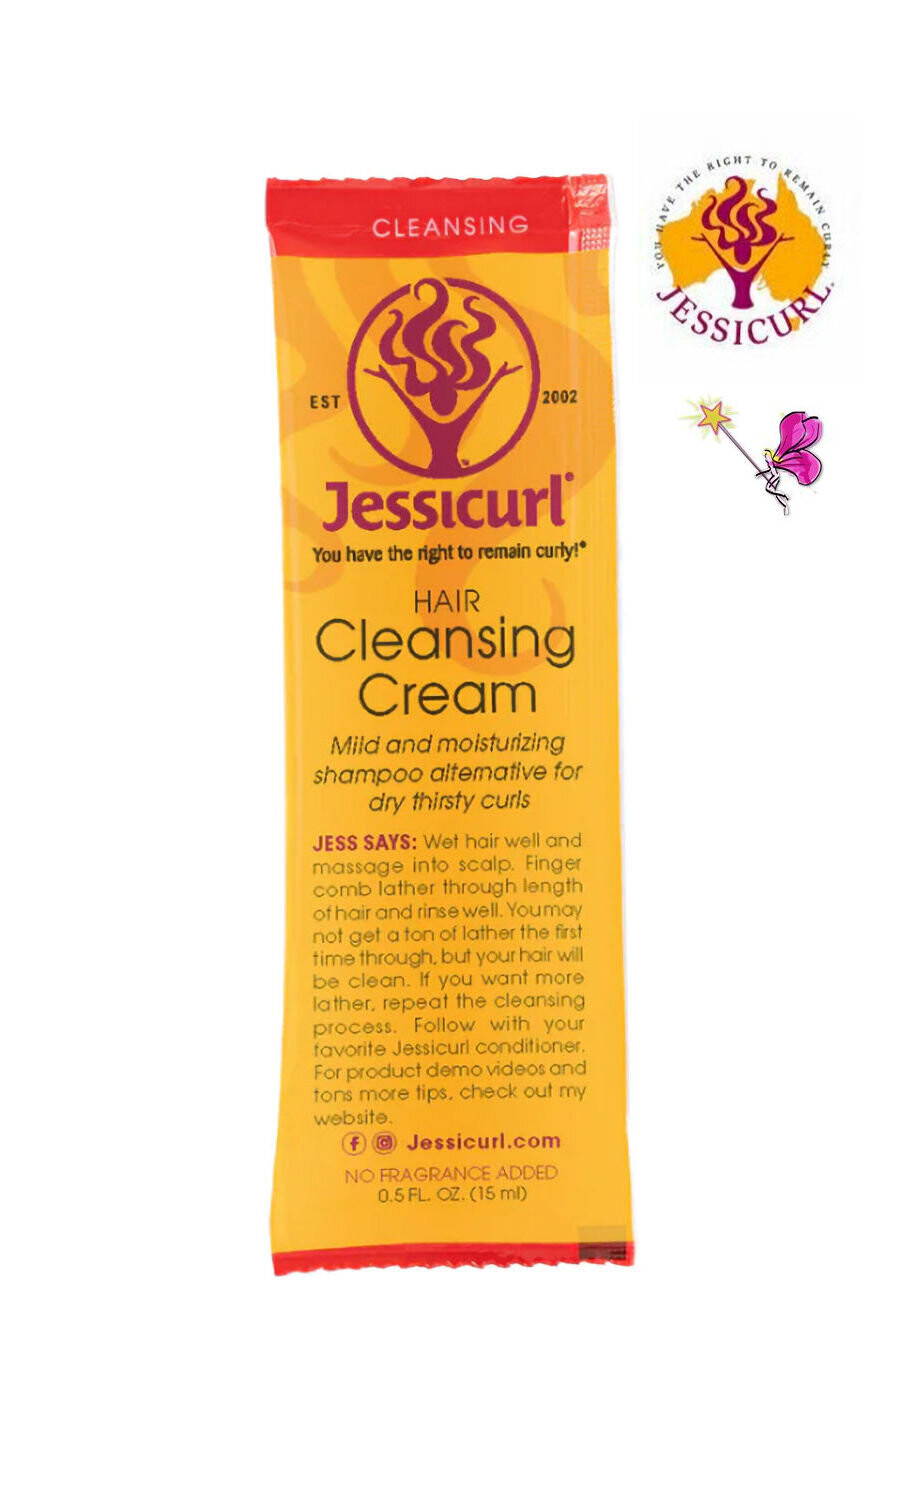 Sample Jessicurl Hair Cleansing Cream 15ml (0.5oz) (No Fragrance)